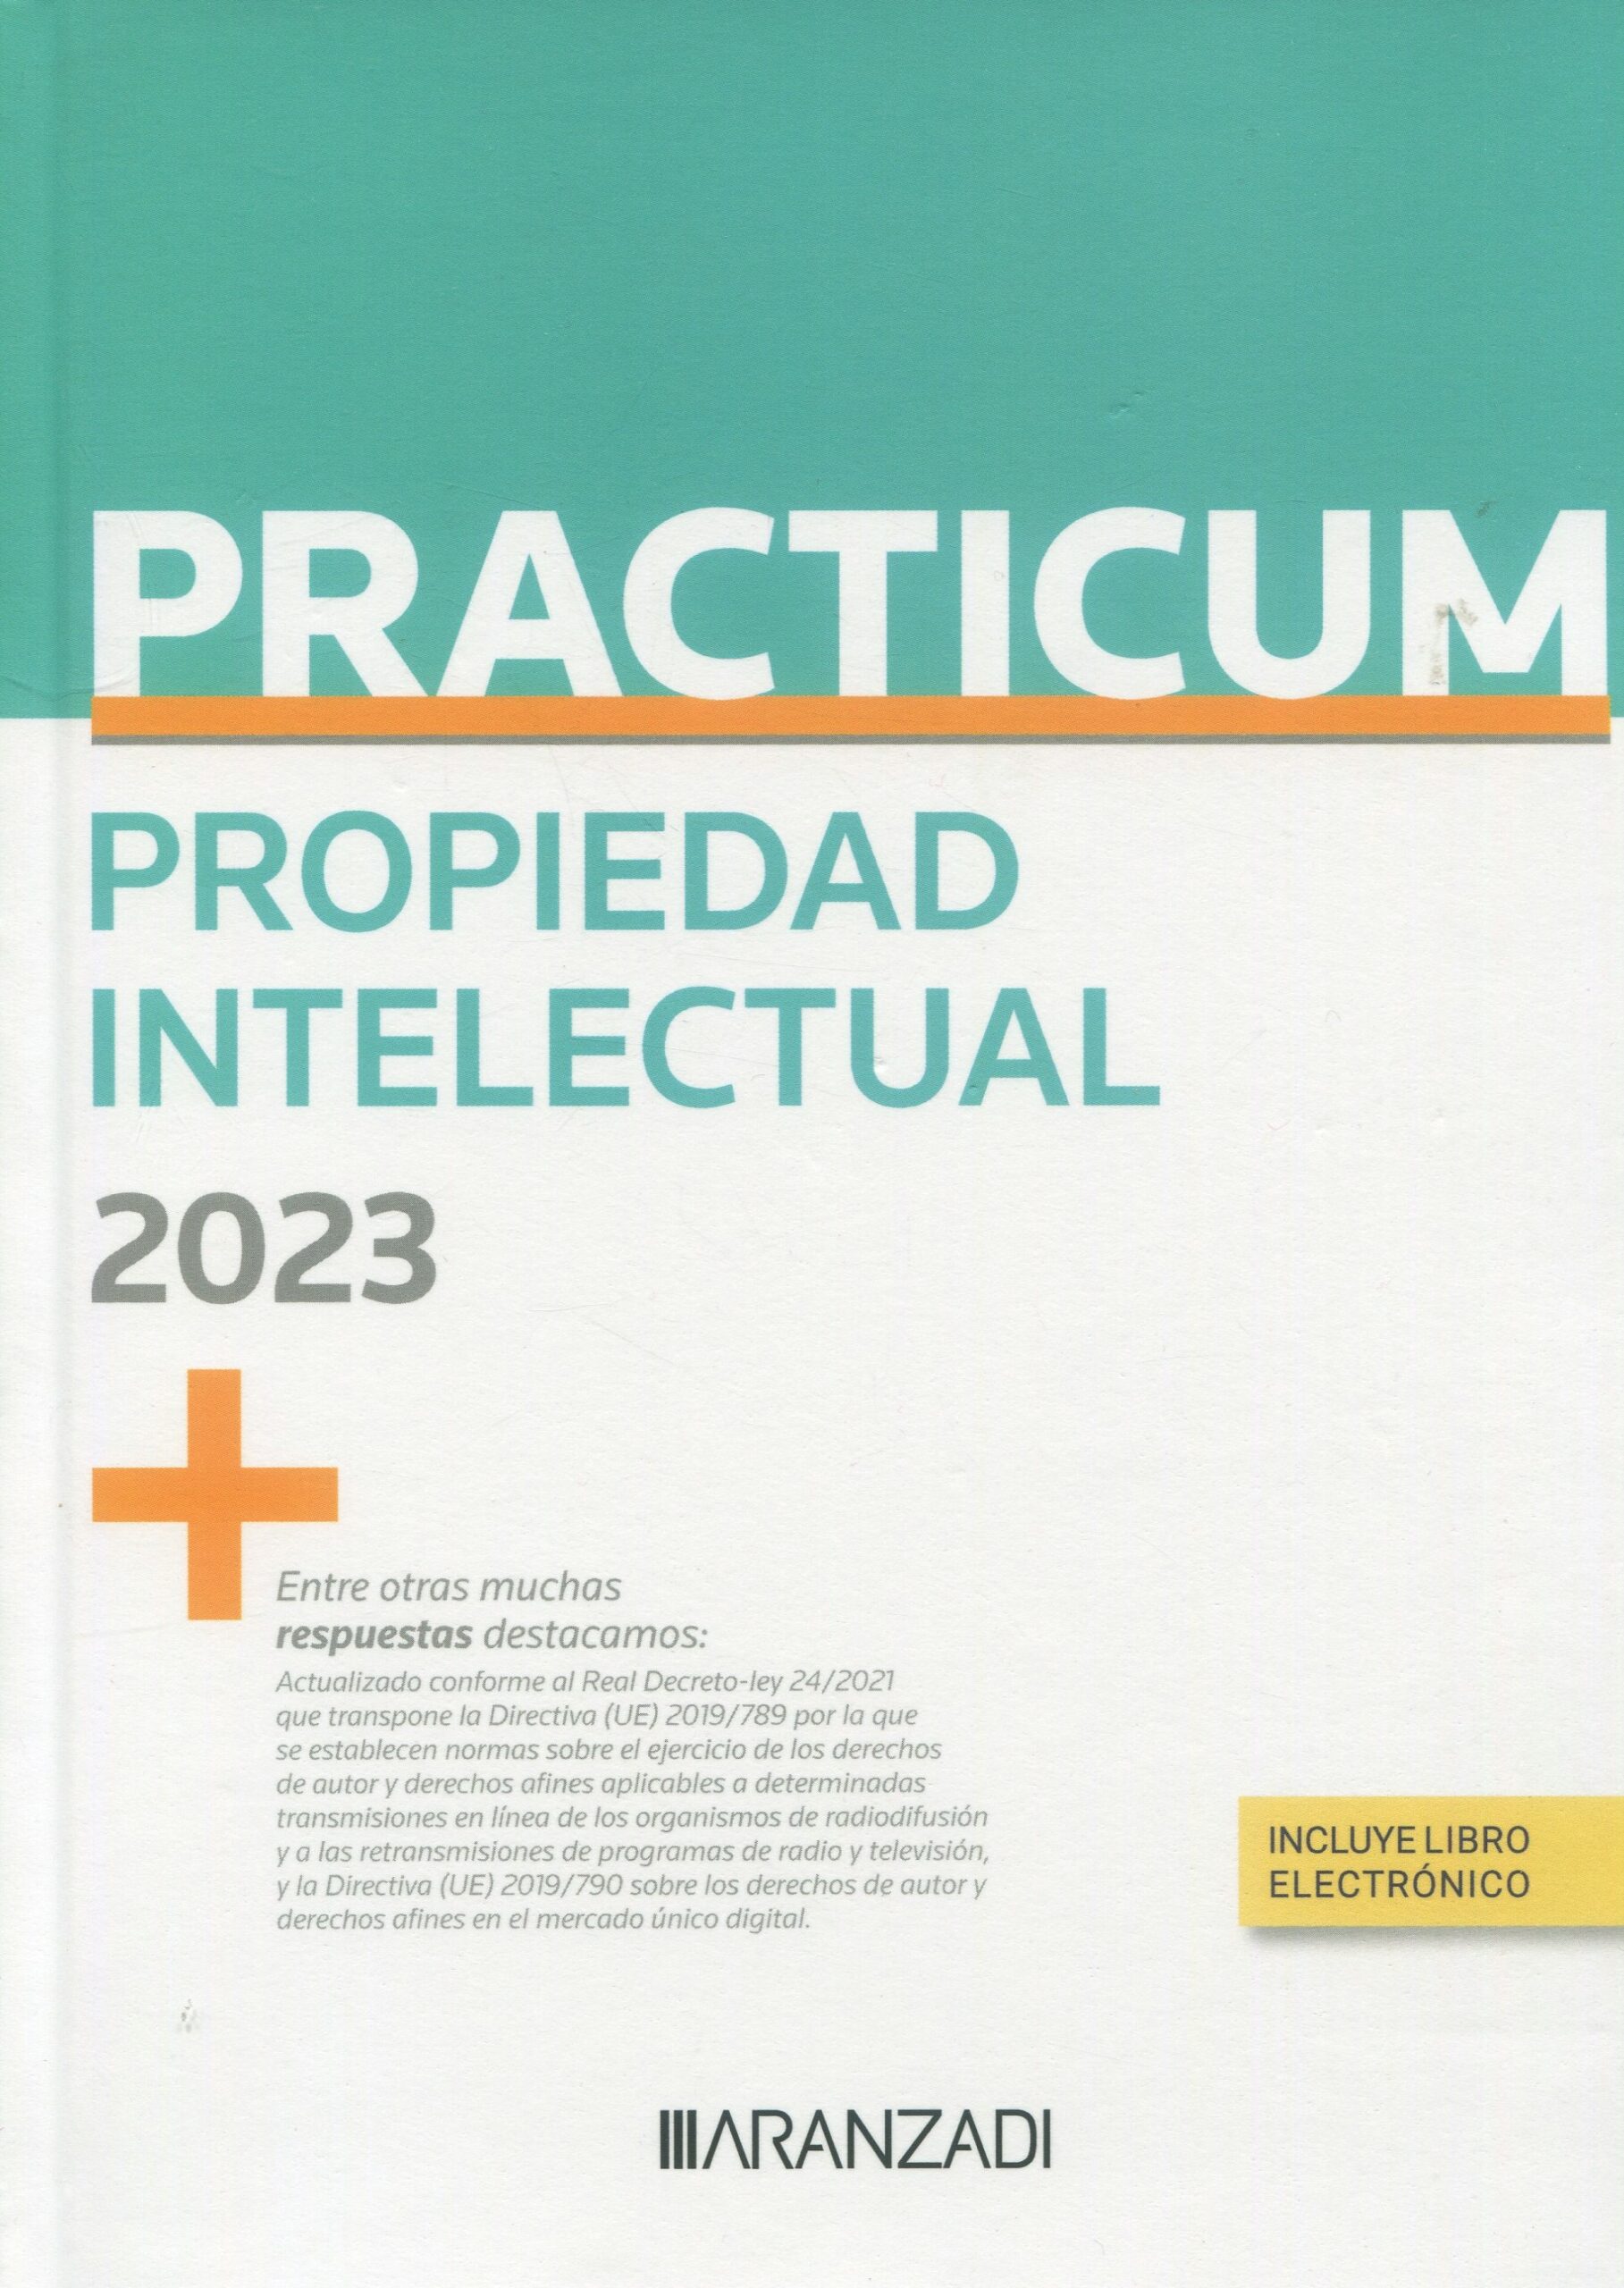 Practicum propiedad intelectual 2020